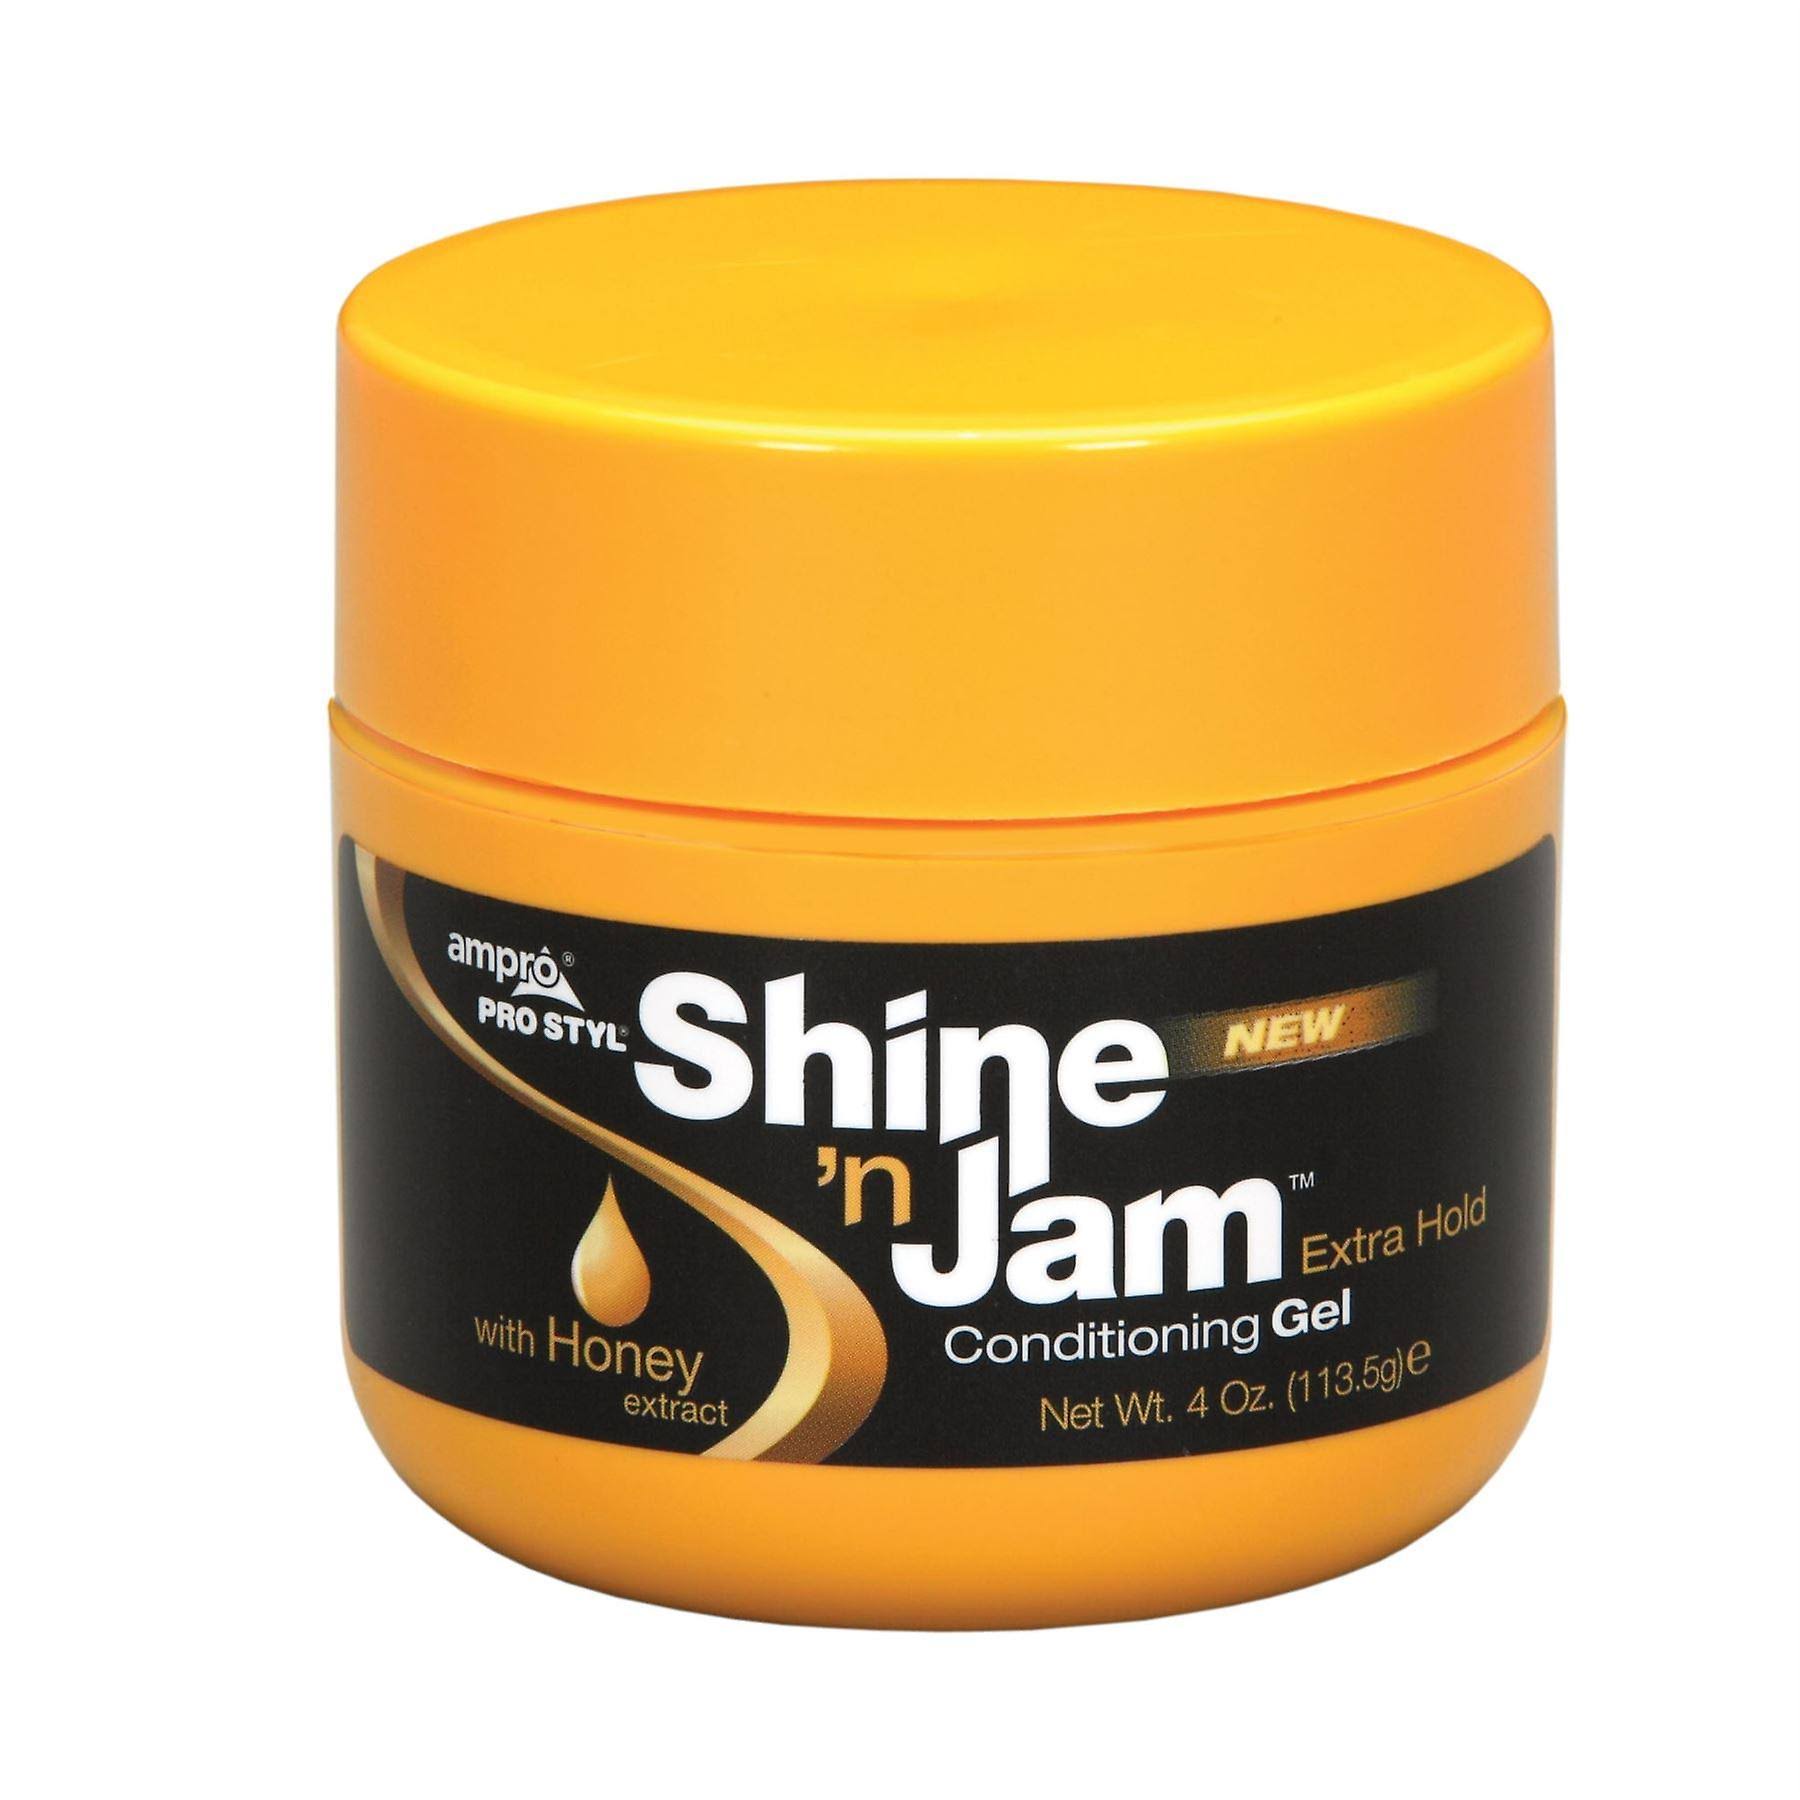 Ampro Shine 'n Jam Conditioning Gel - Extra Hold, 4oz